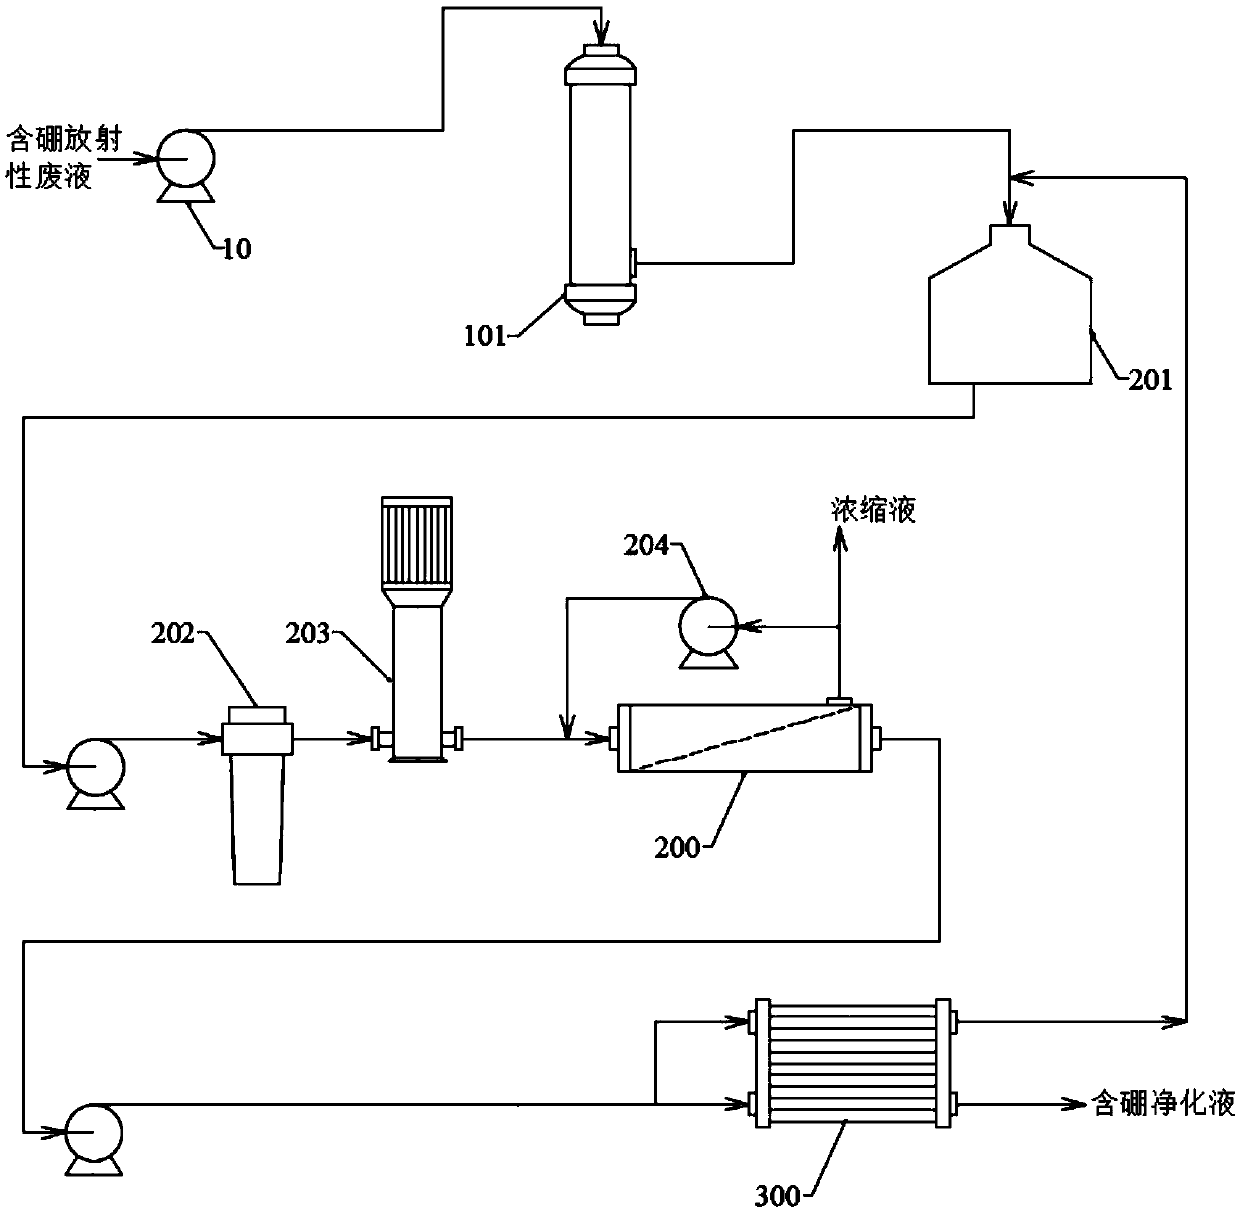 Boron-containing radioactive waste liquid treatment device and method